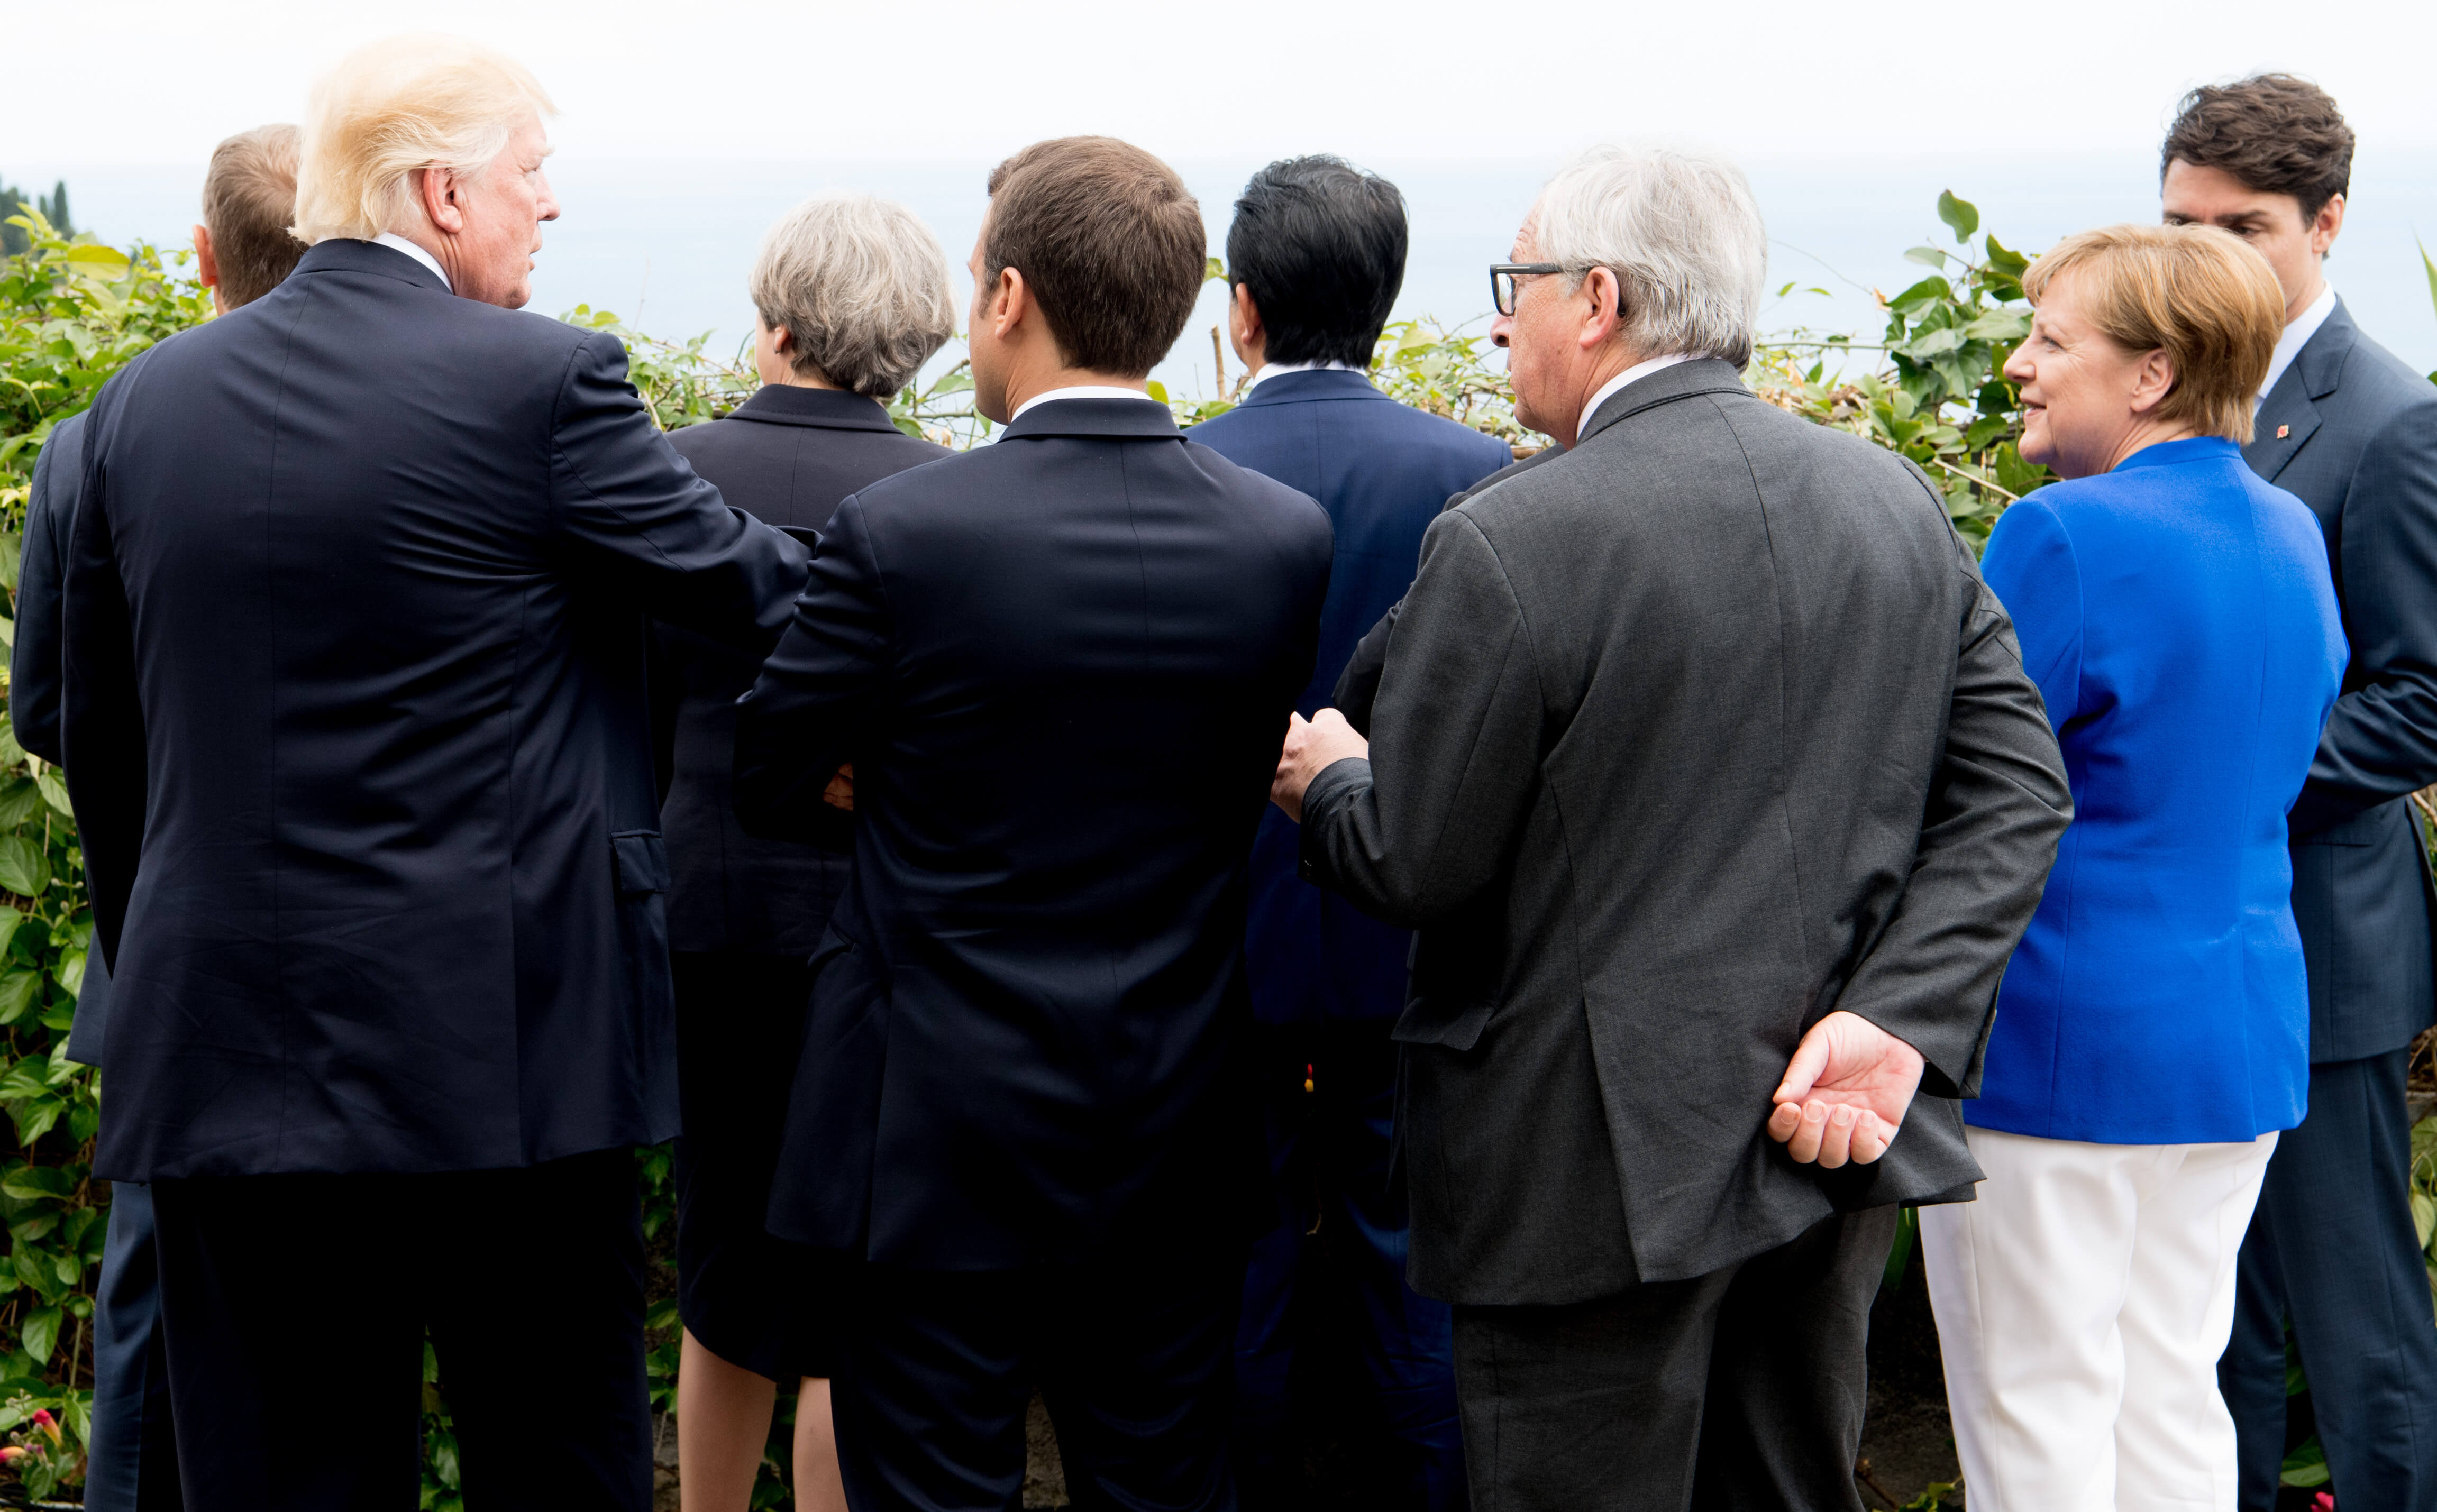 Donald Tusk, Donald Trump, Theresa May, Emmanuel Macron, Shinzo Abe, Jean-Claude Juncker, Angela Merkel and Justin Trudeau during the G7 summit in Italy 2017.